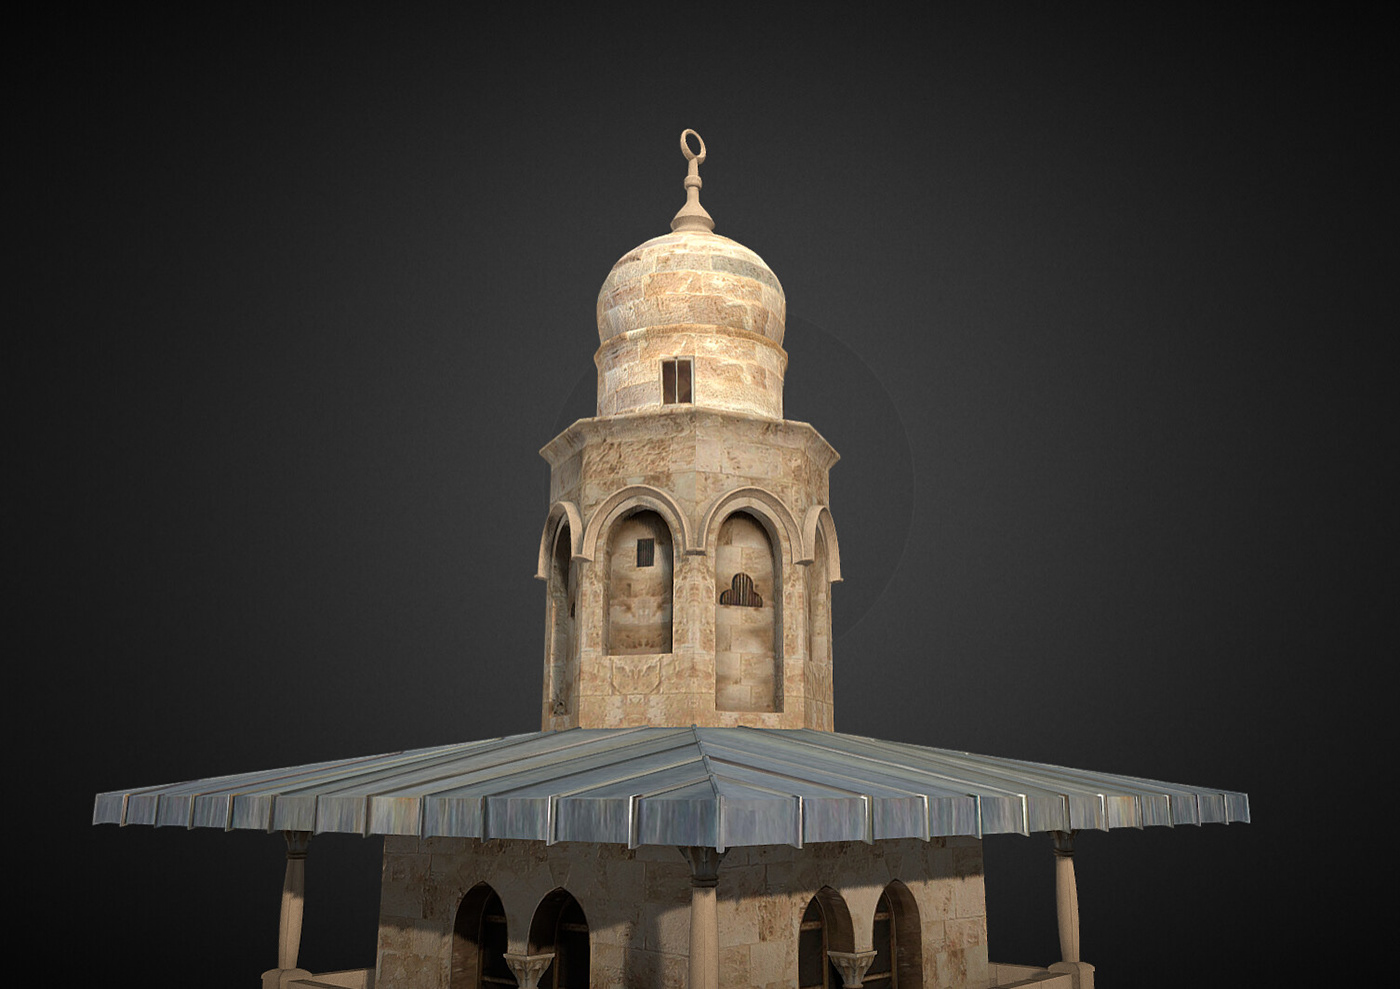 islamic architect jerusalem 二十四节气 소식지디자인 palestine ᬩᬮᬶ freedom dome-of-the-rock minaret